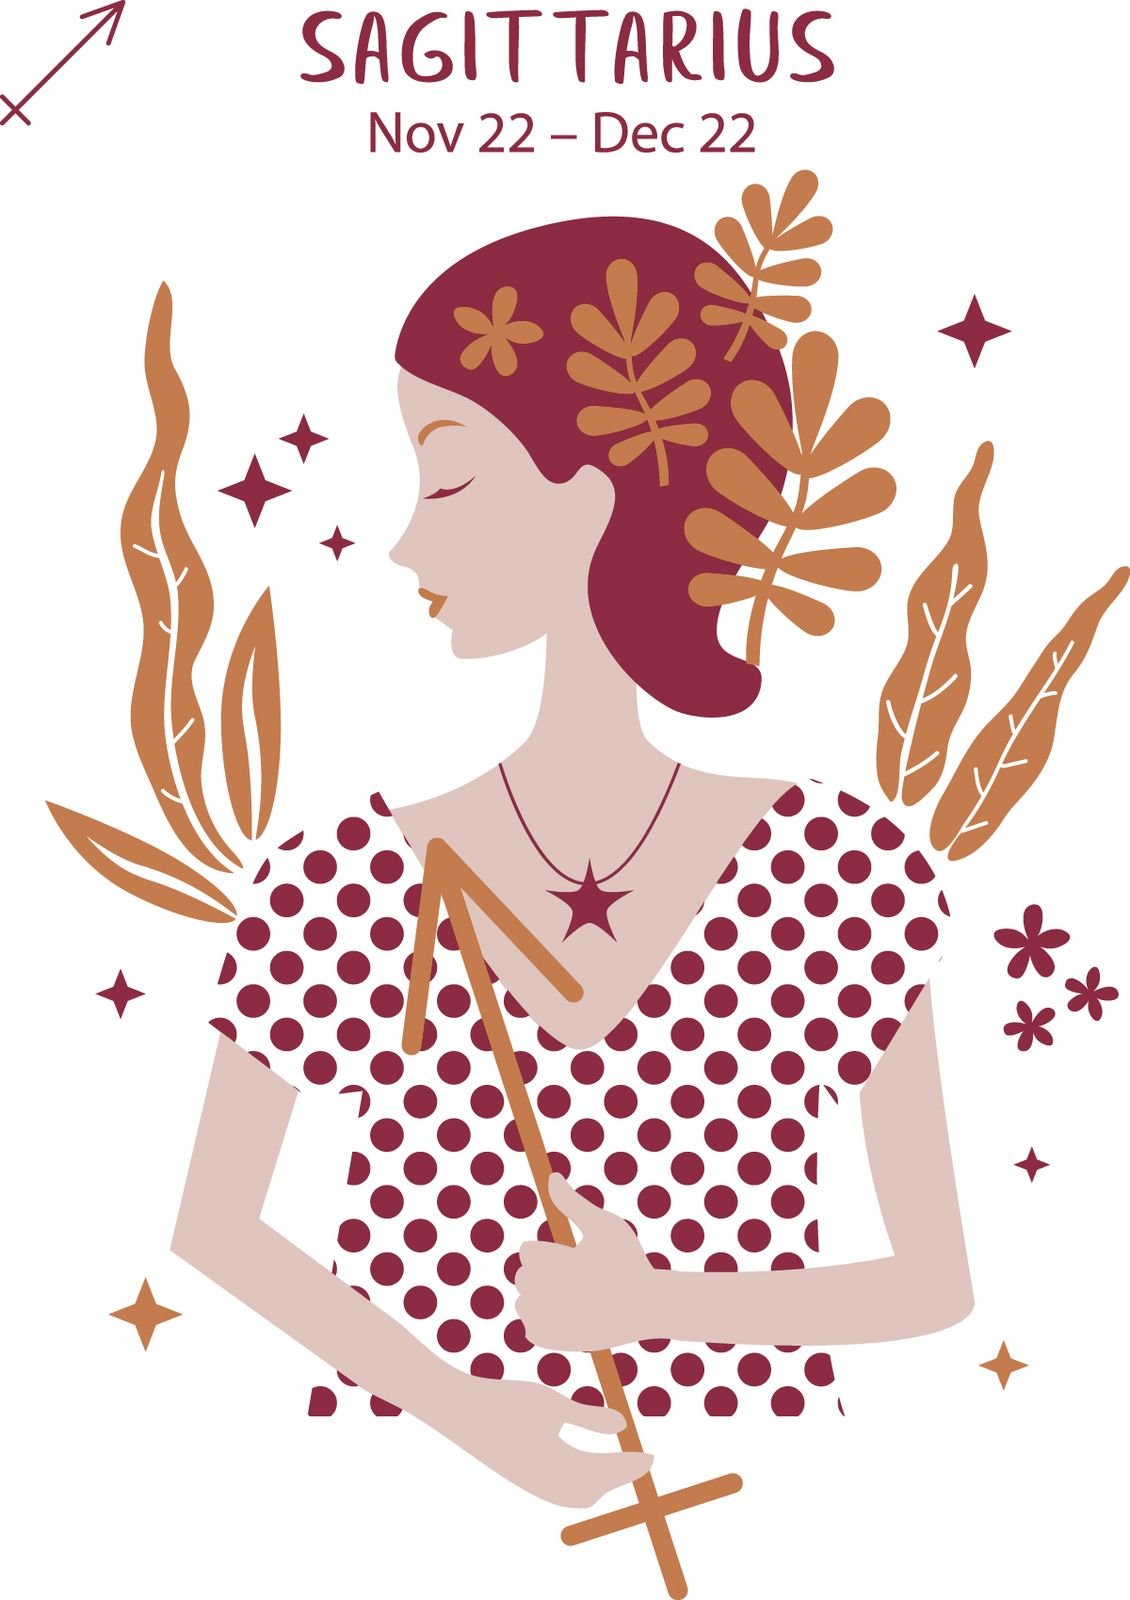 A feminine representation of the Horoscope sign for Sagittarius.